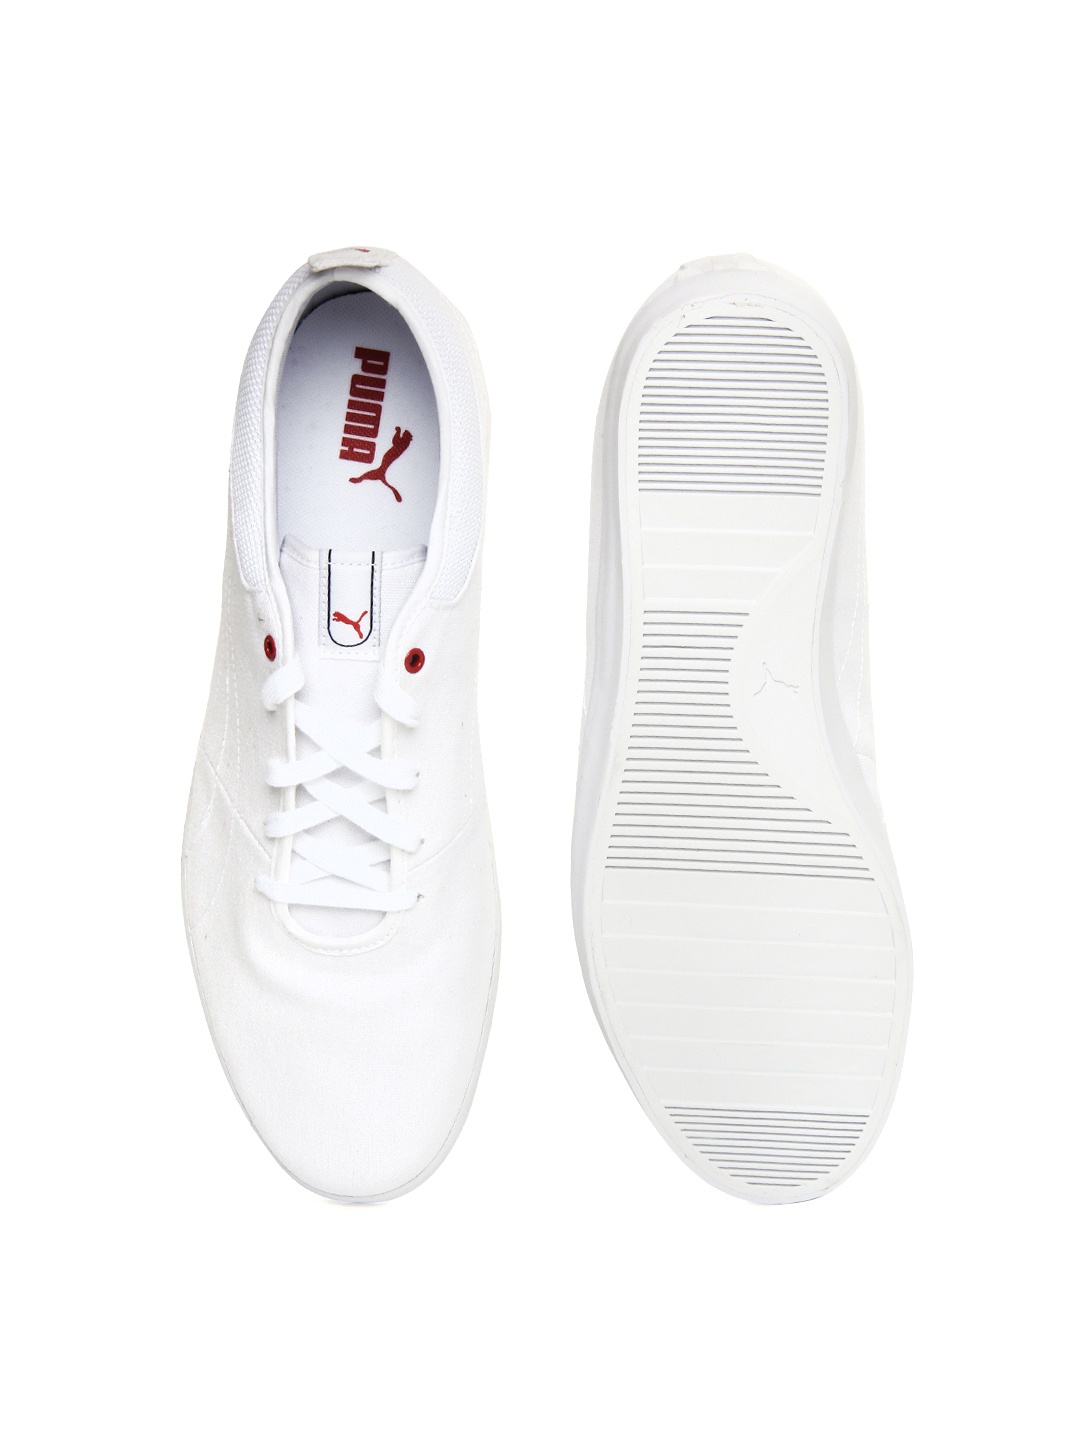 puma white shoes online